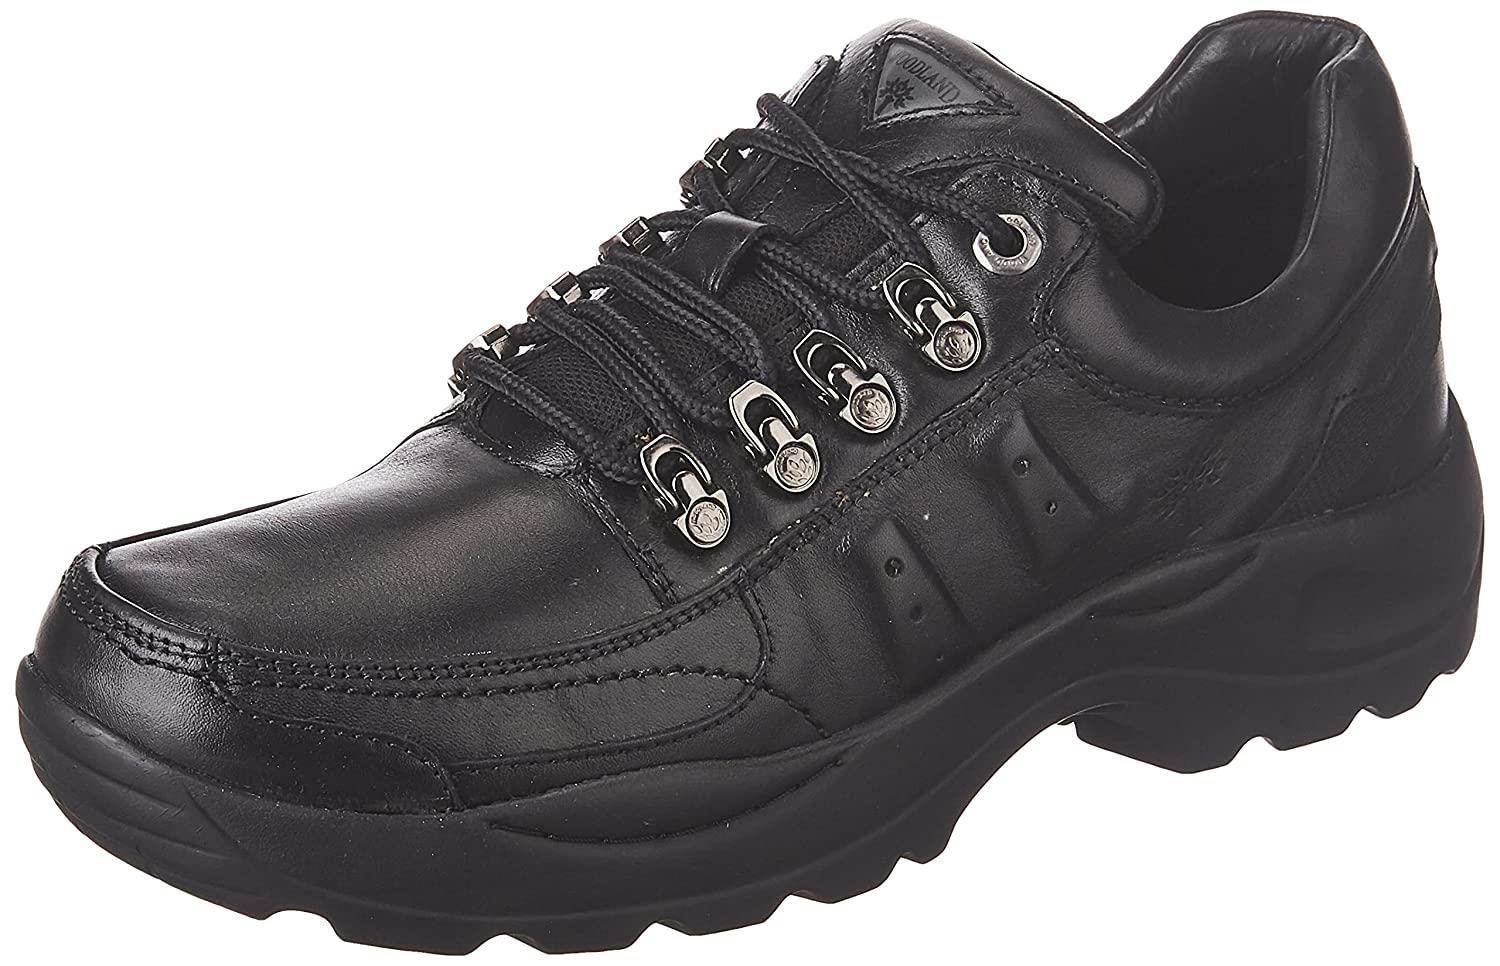 Woodland MARPAT Men's Tactical Sneakers | eBay